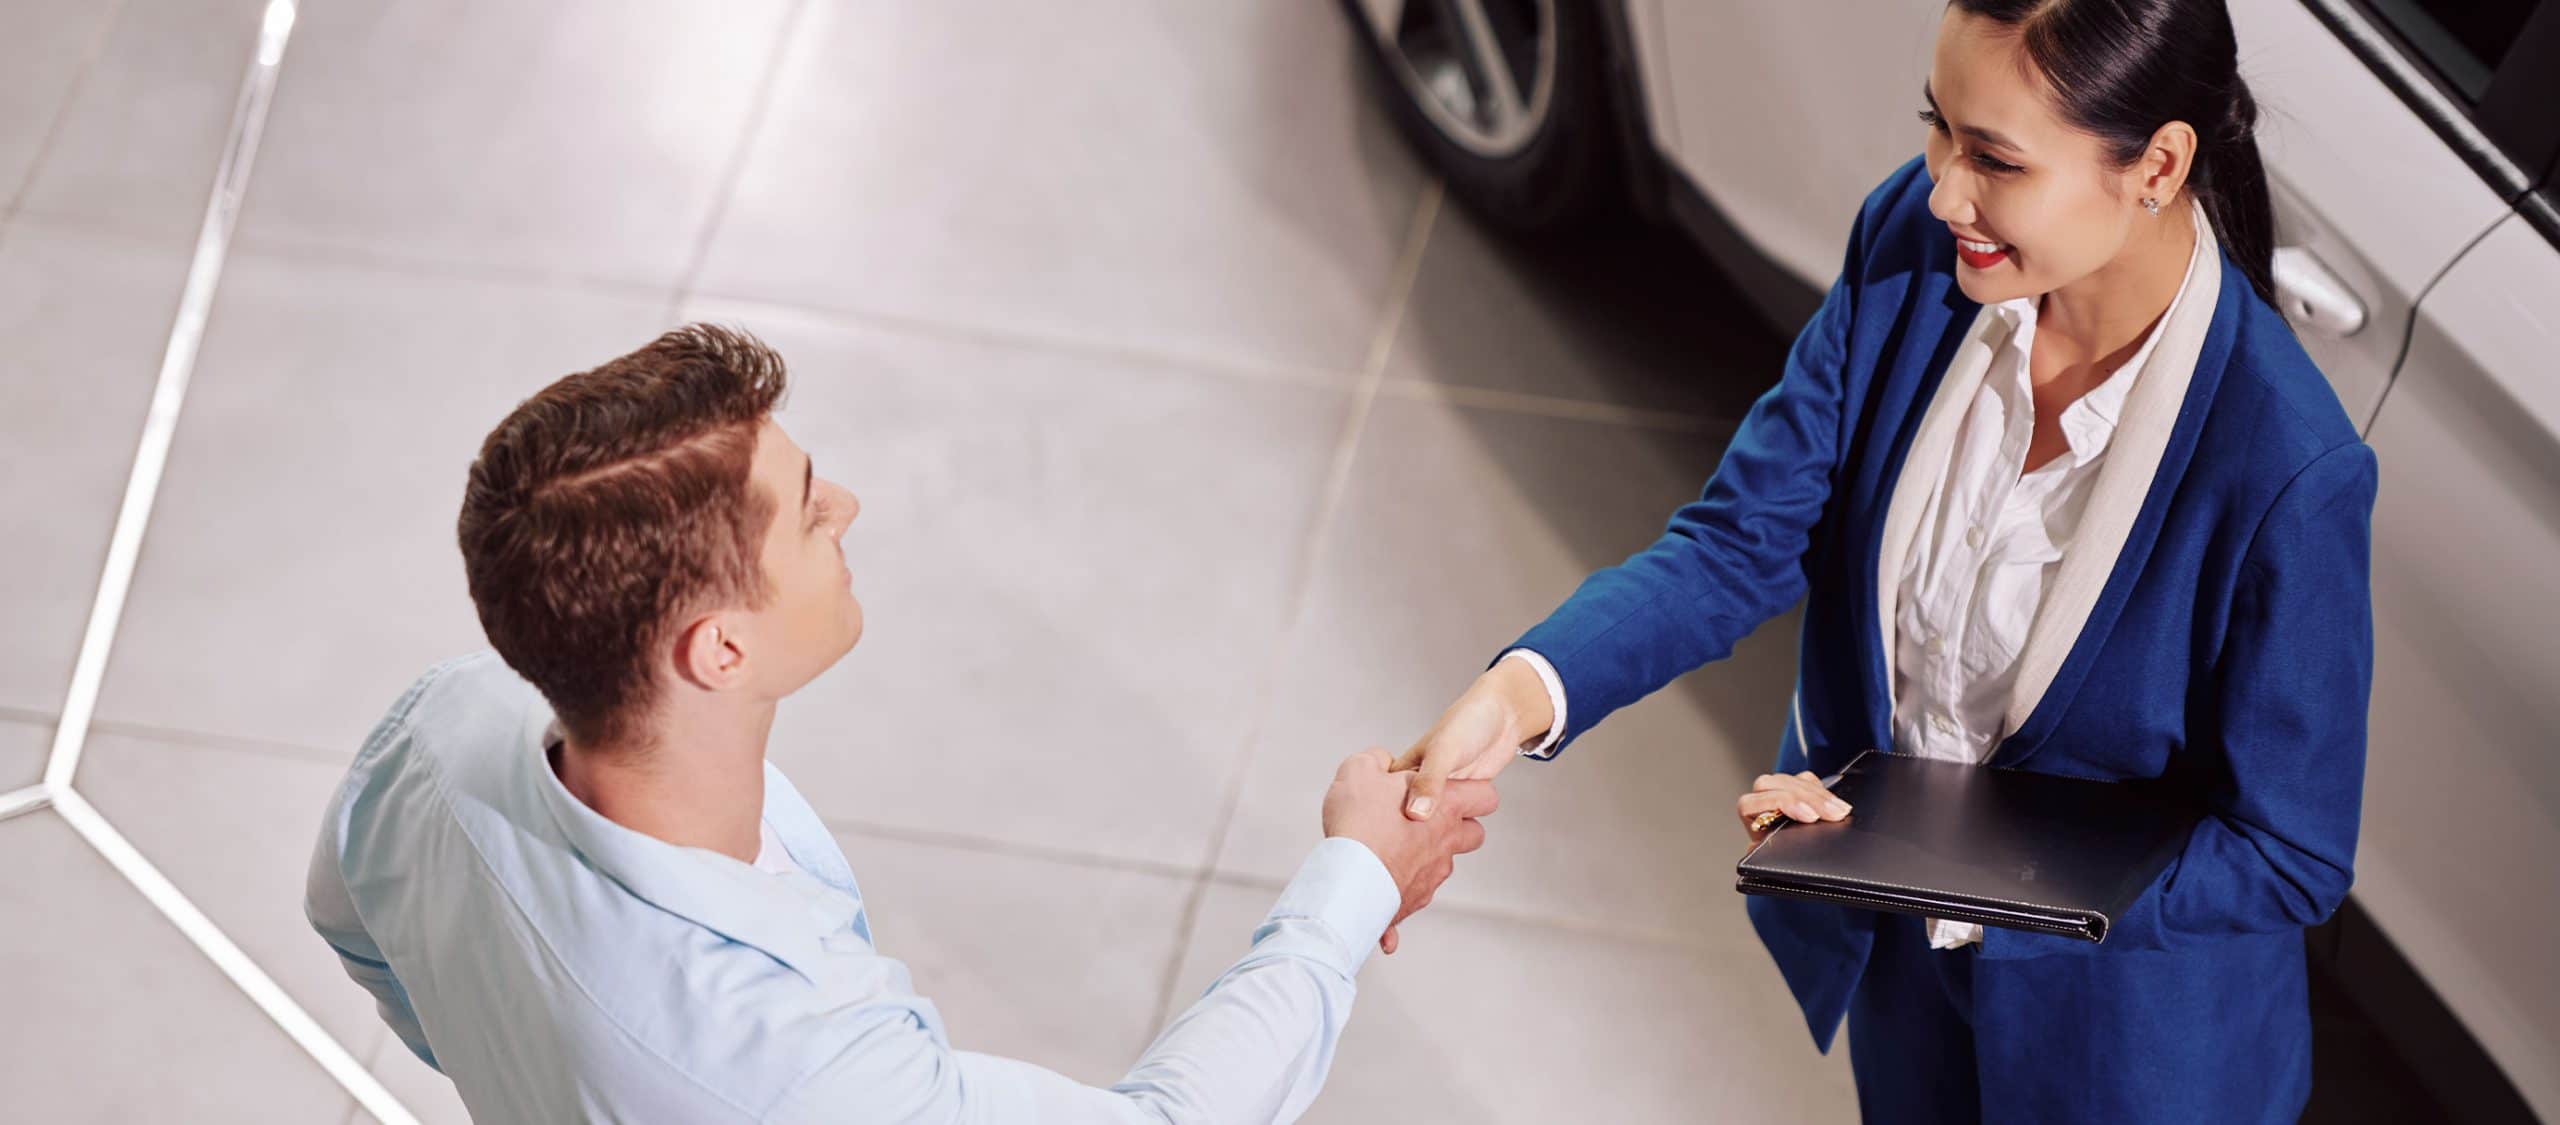 sales rep at car dealership shaking hands with customer